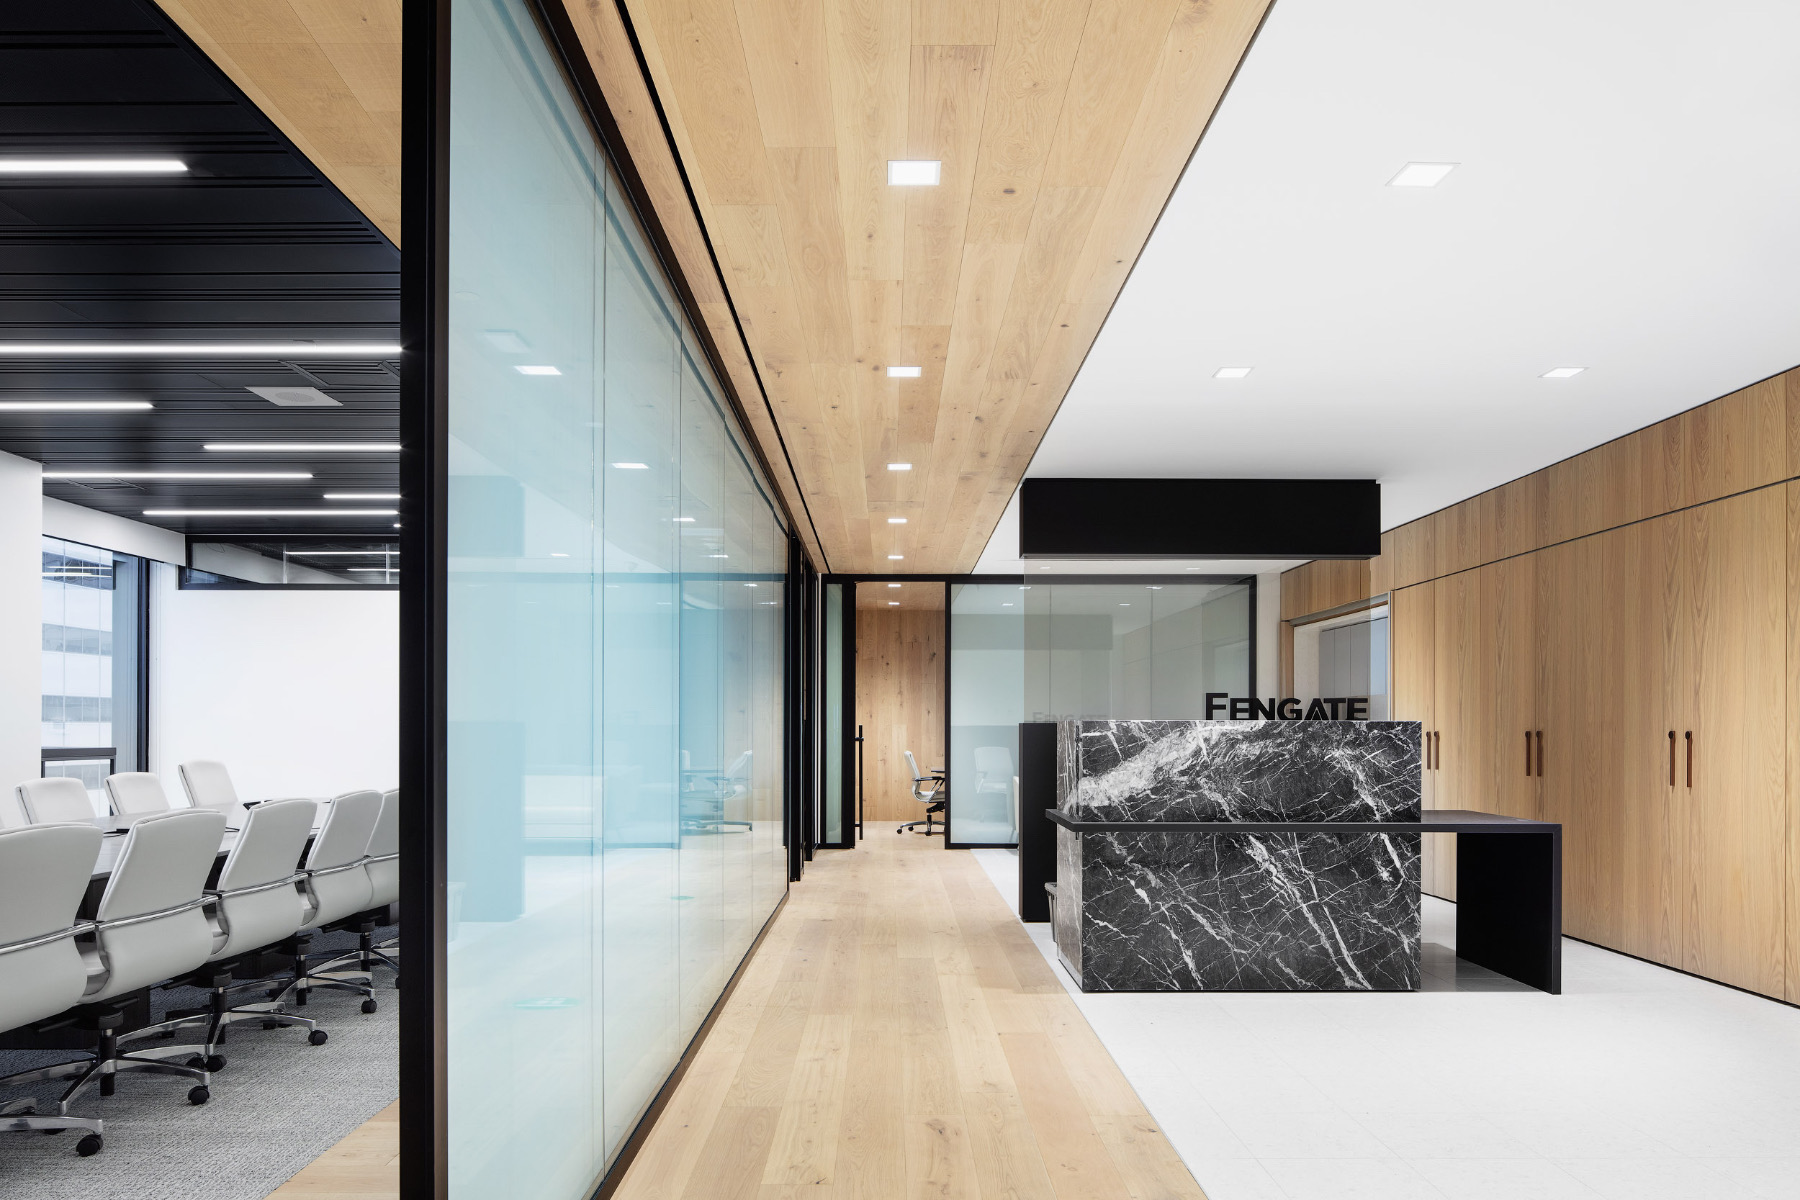 A Look Inside Fengate's New Toronto Office - Officelovin'